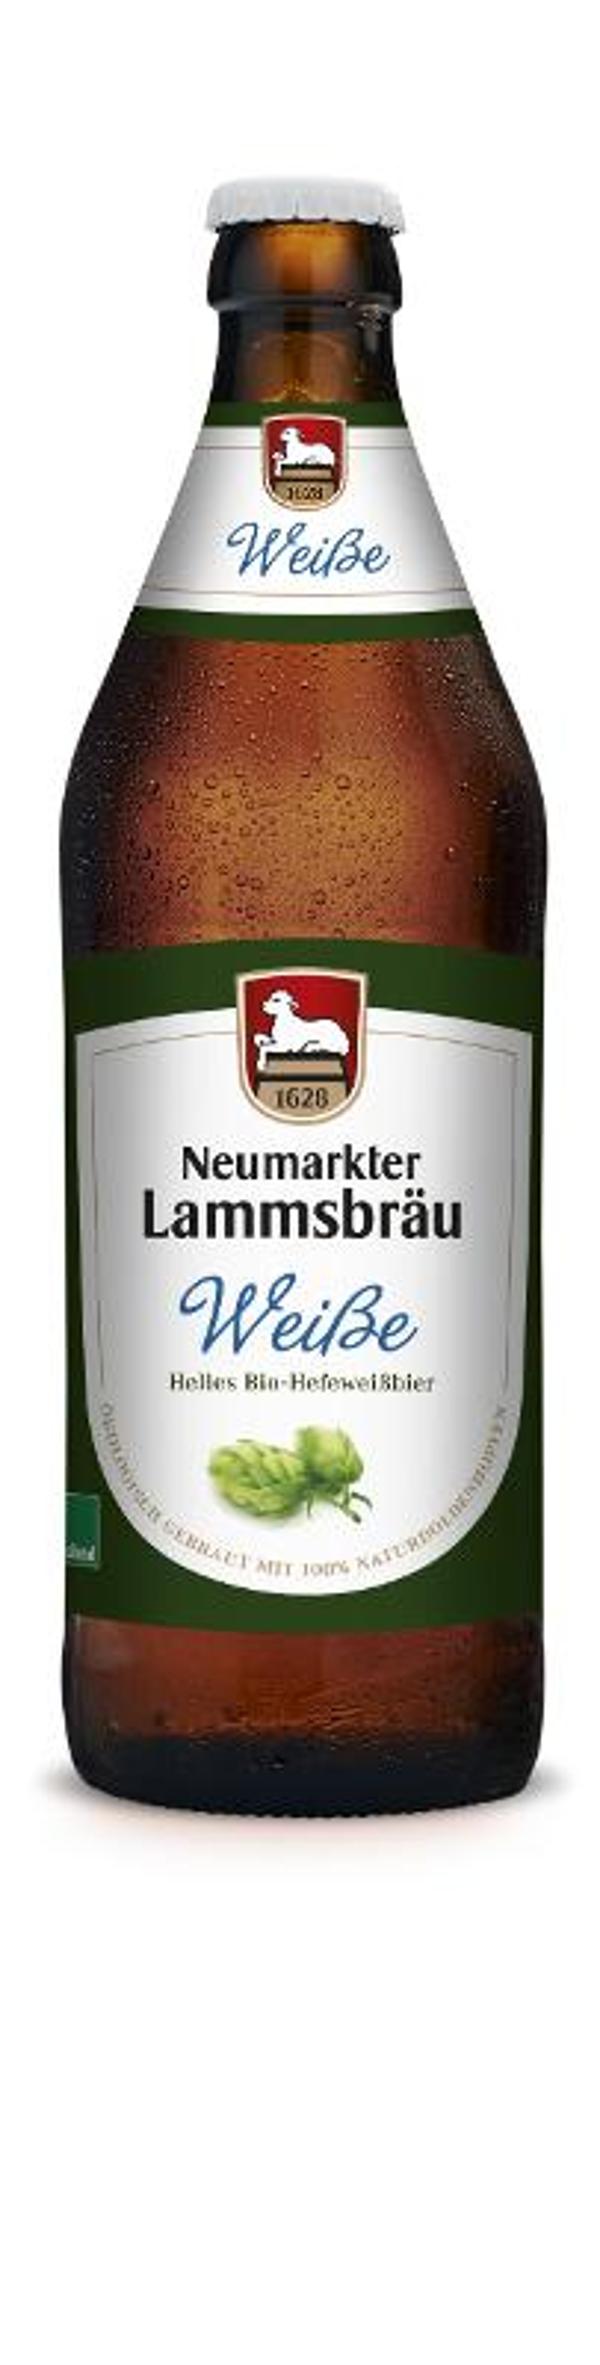 Produktfoto zu VPE Bier Lammsbräu Weiße 10x0,5 l Neumarkter Lammsbräu